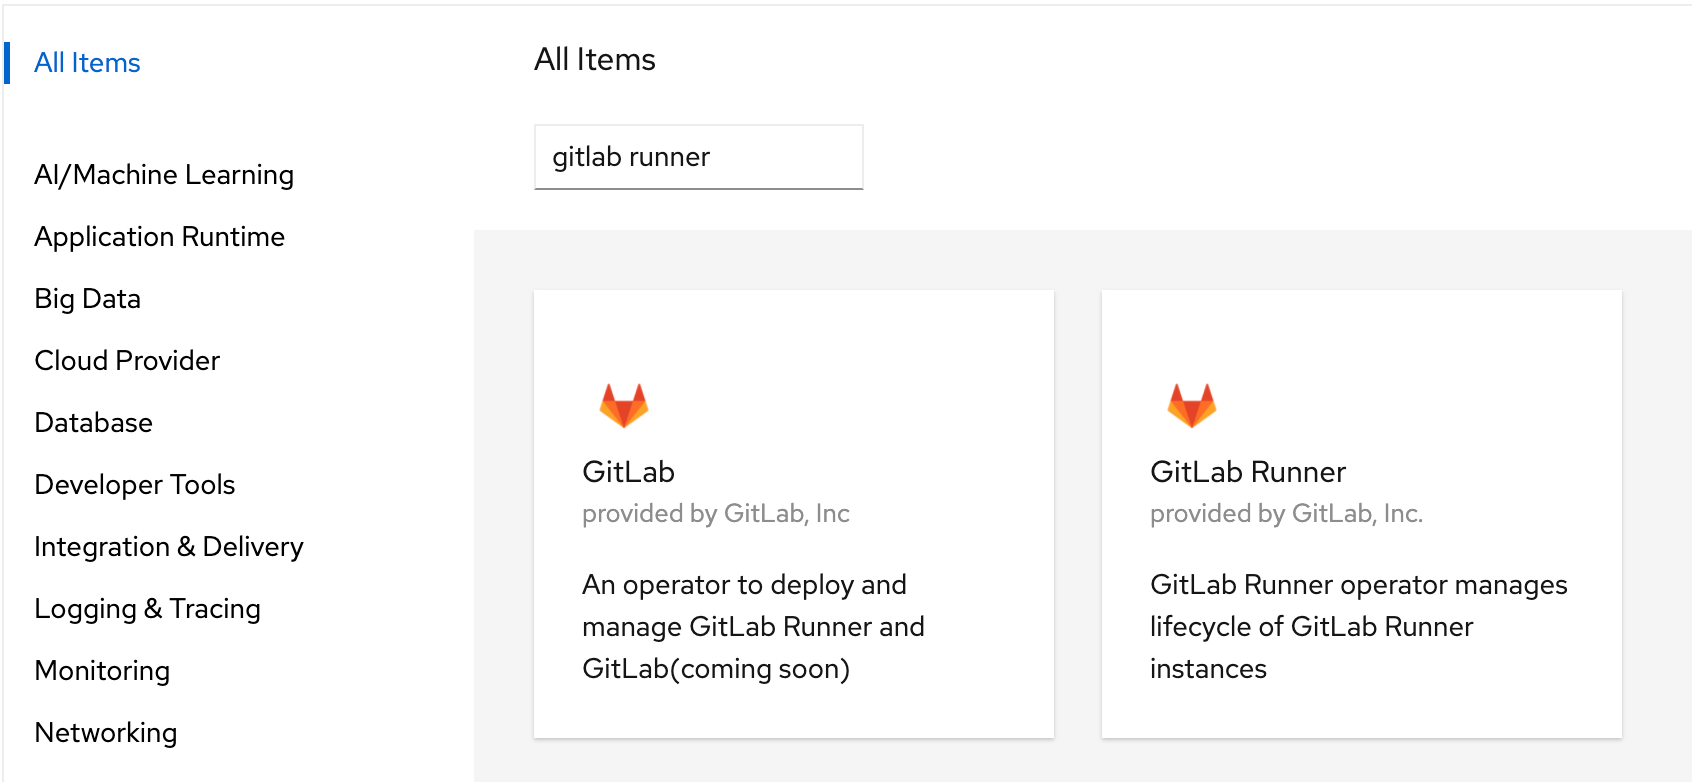 GitLab Operator